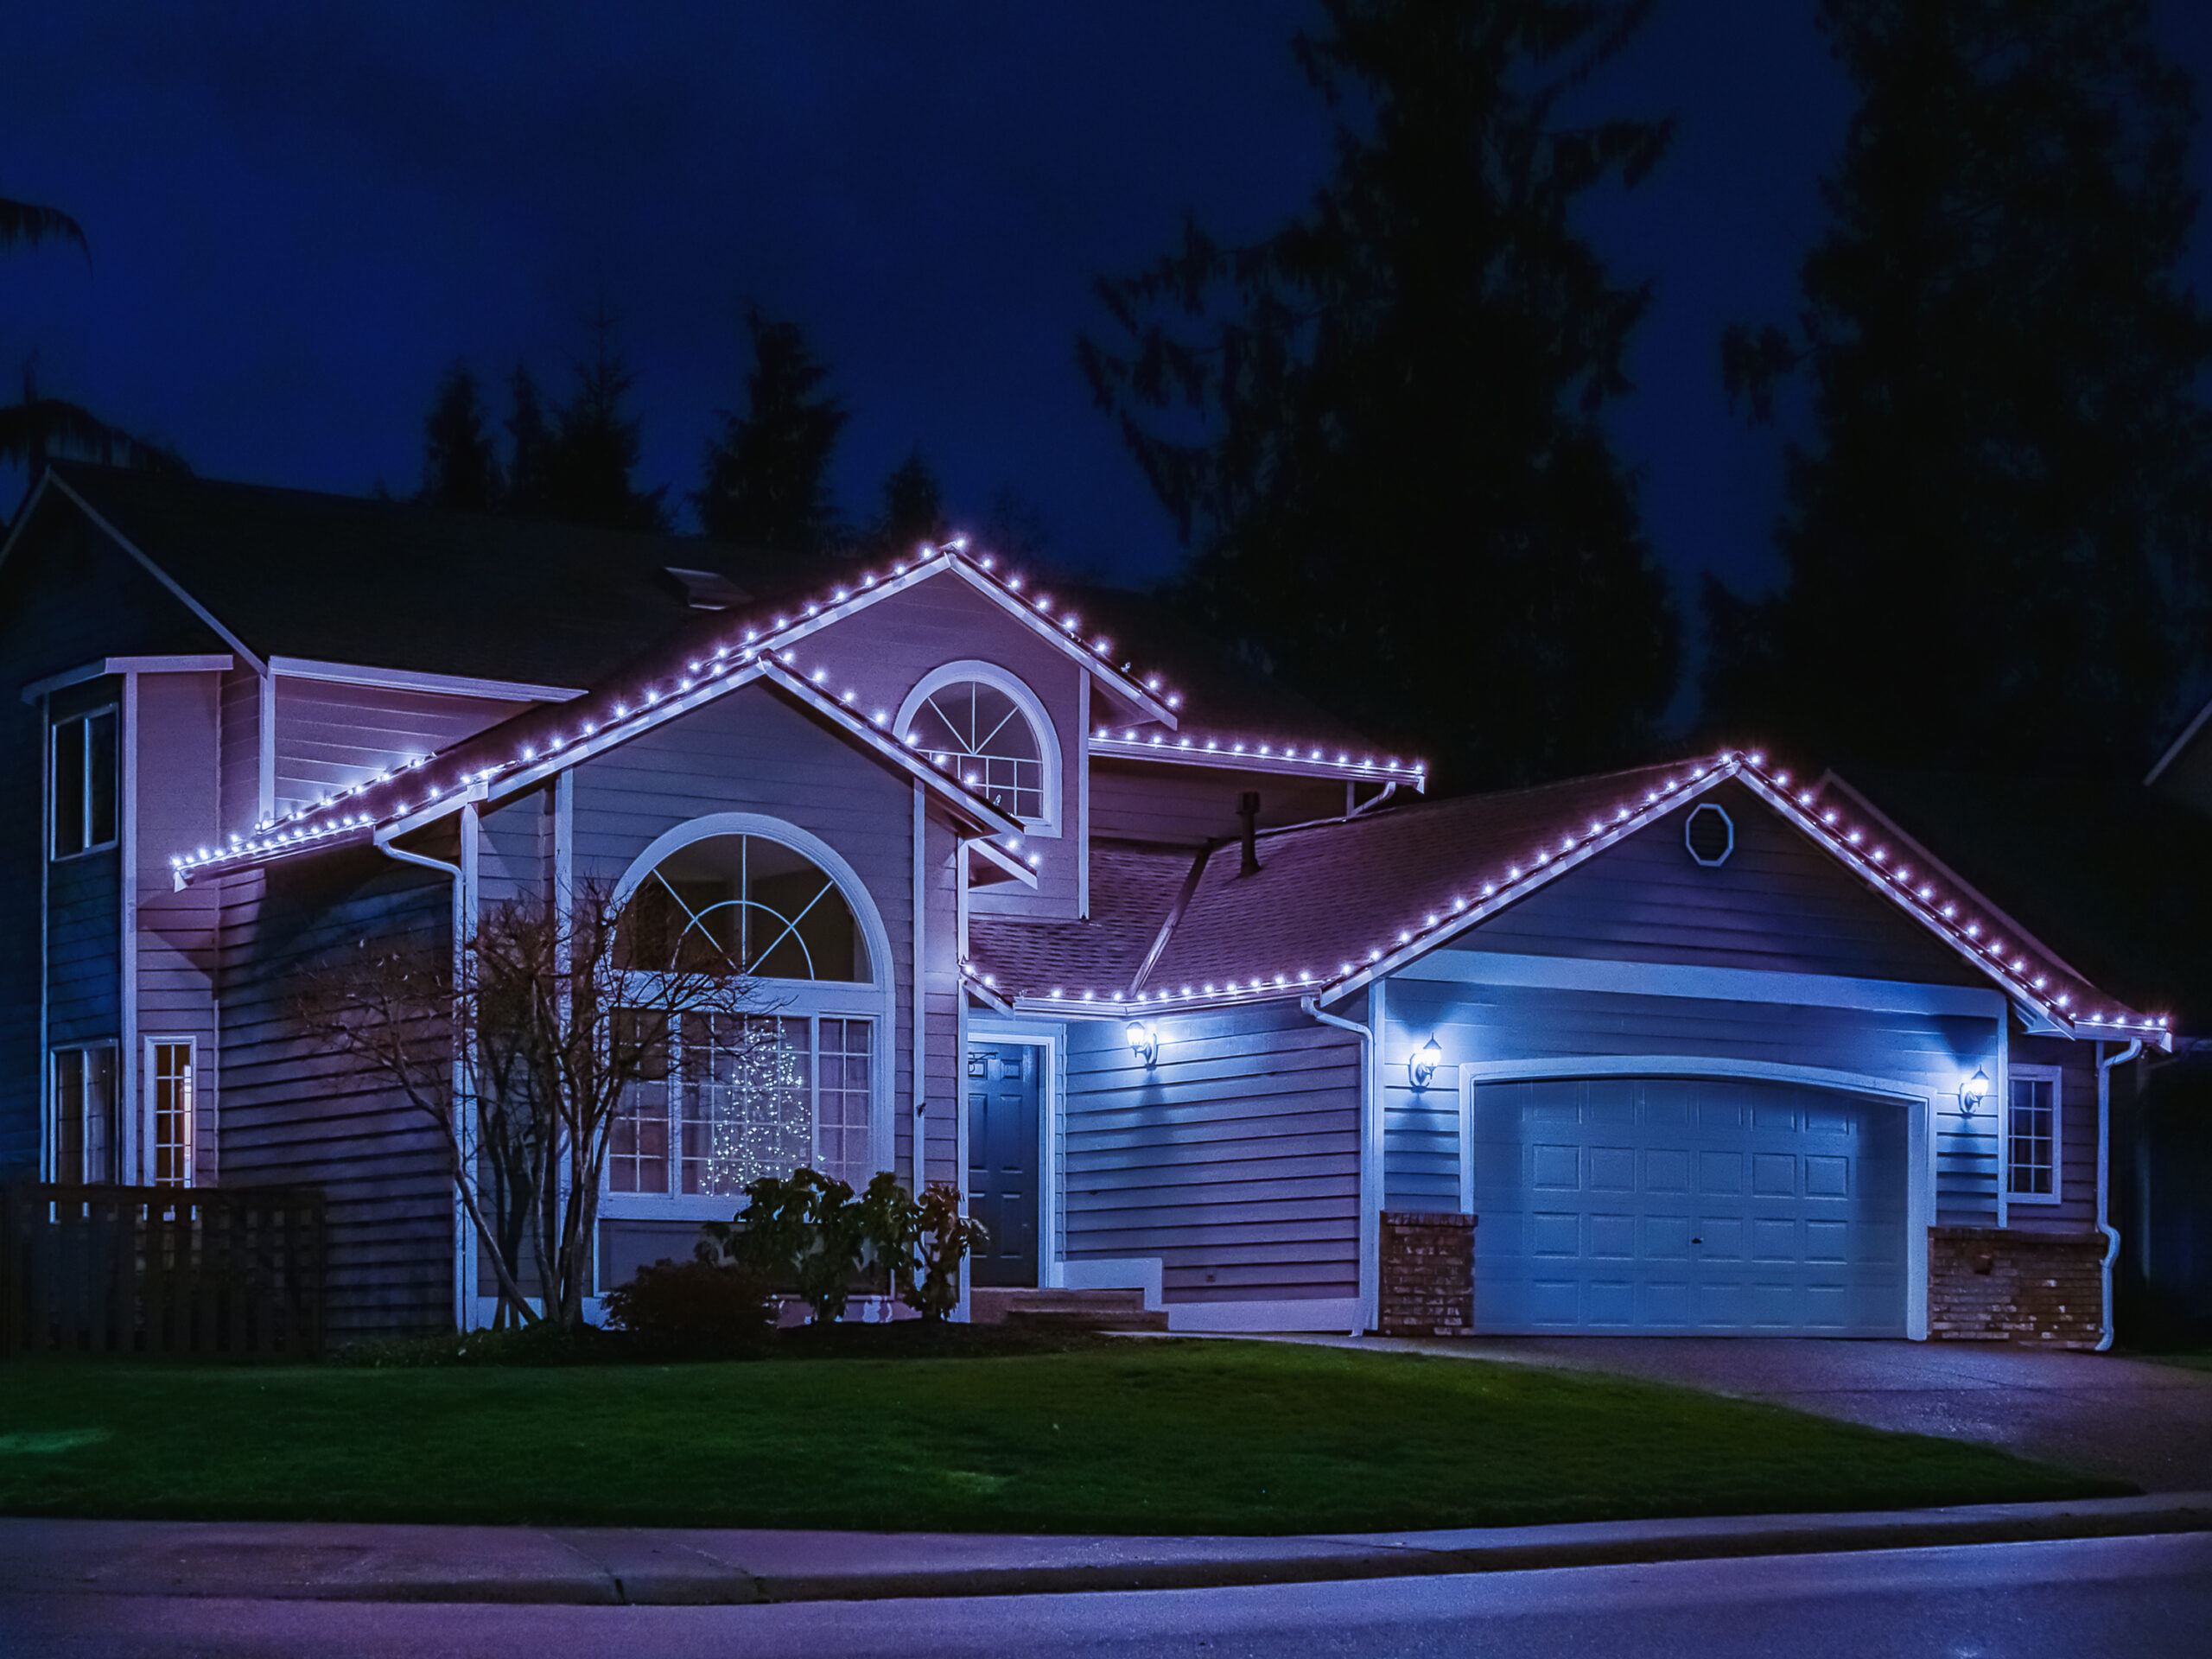 American suburban home exterior with festive Christmas lights